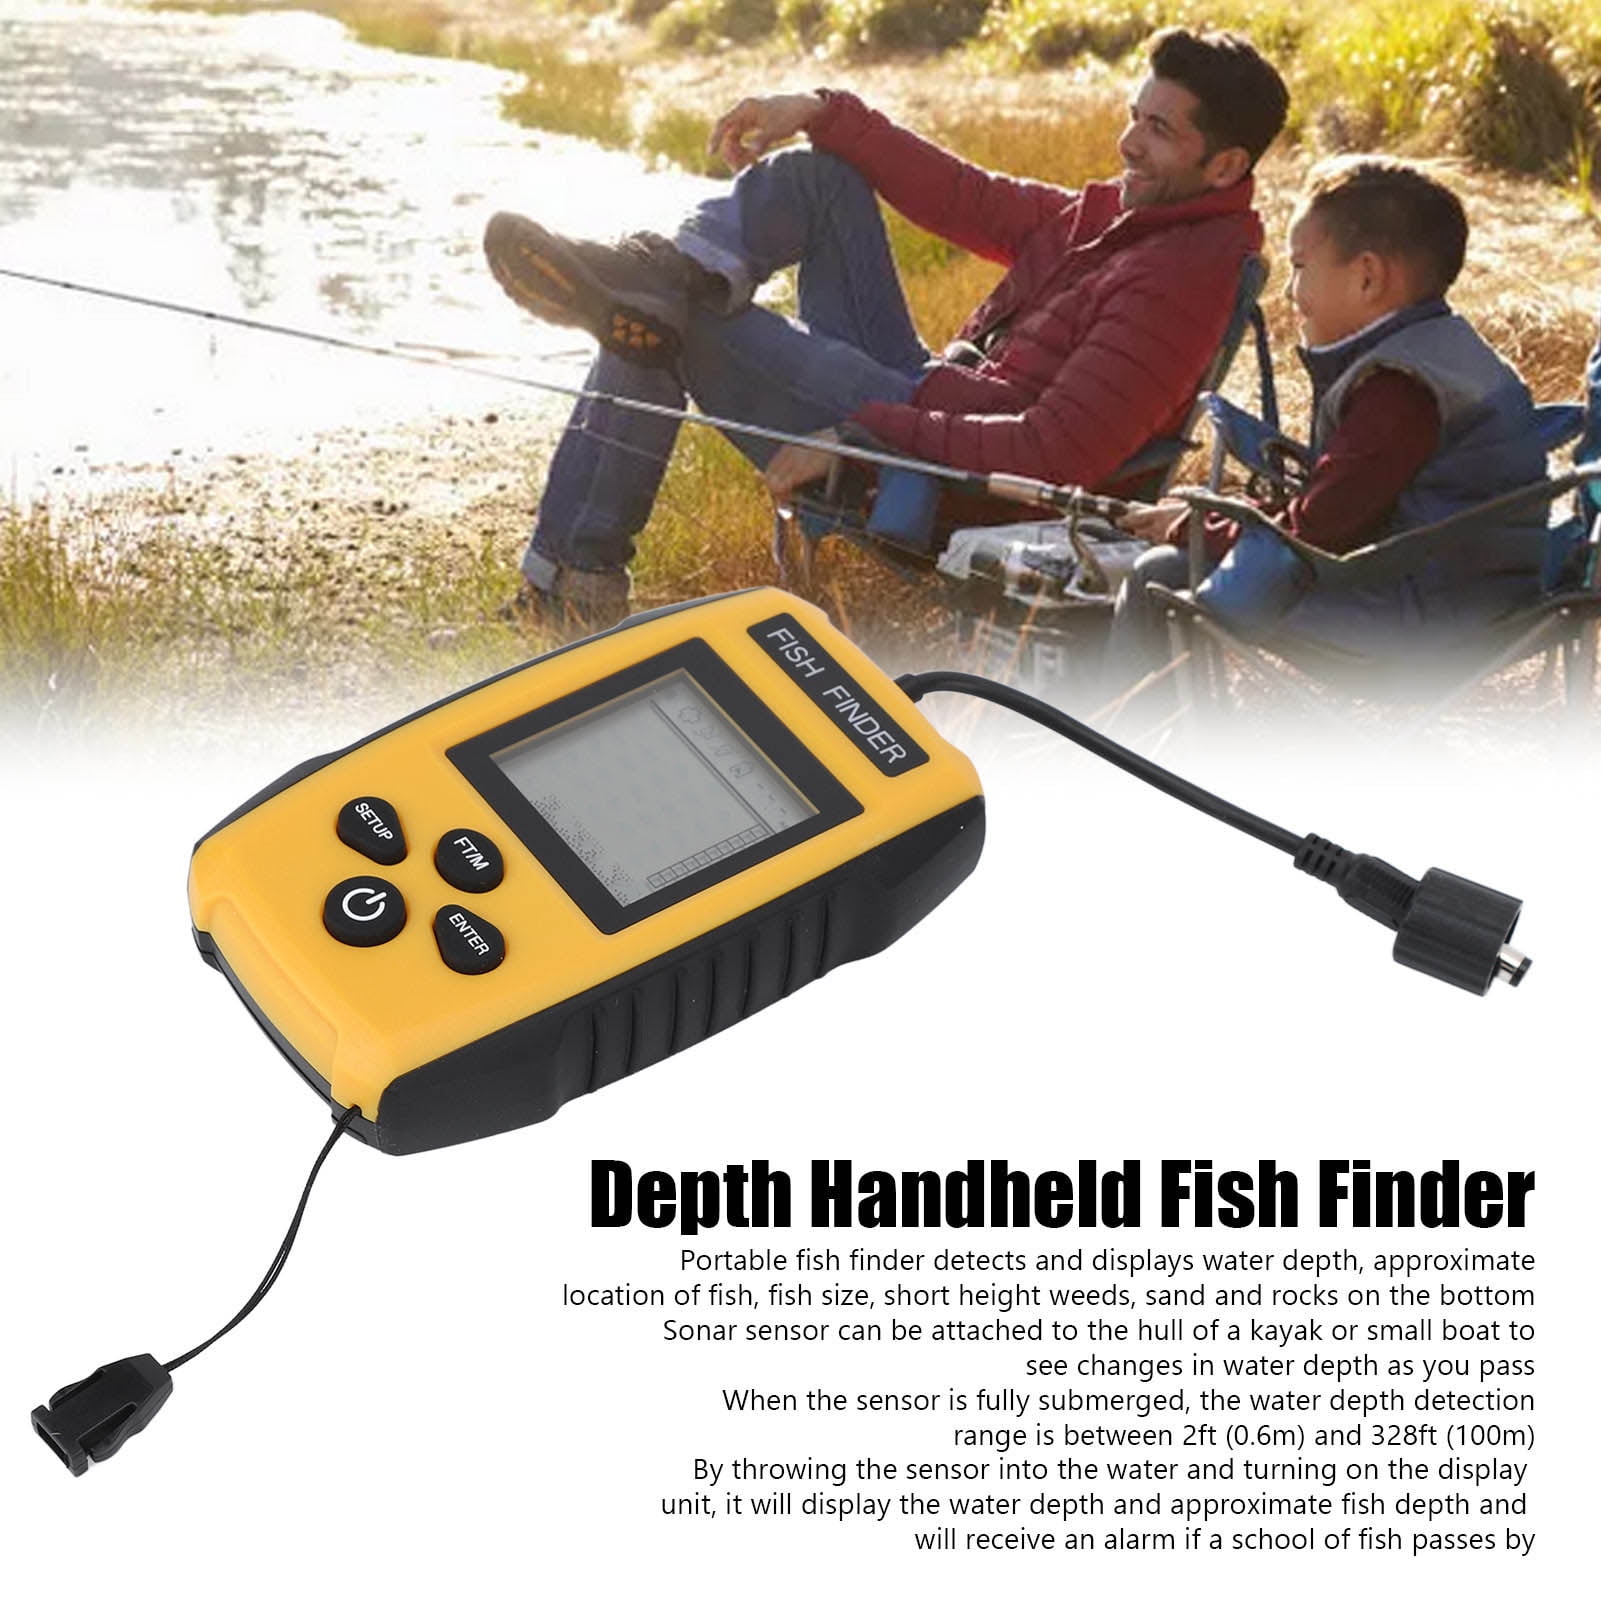 Kqiang New Portable Fish Finder Echo Sonar Alarm Sensor Transducer Fishfinder US Seller, Size: 1XL